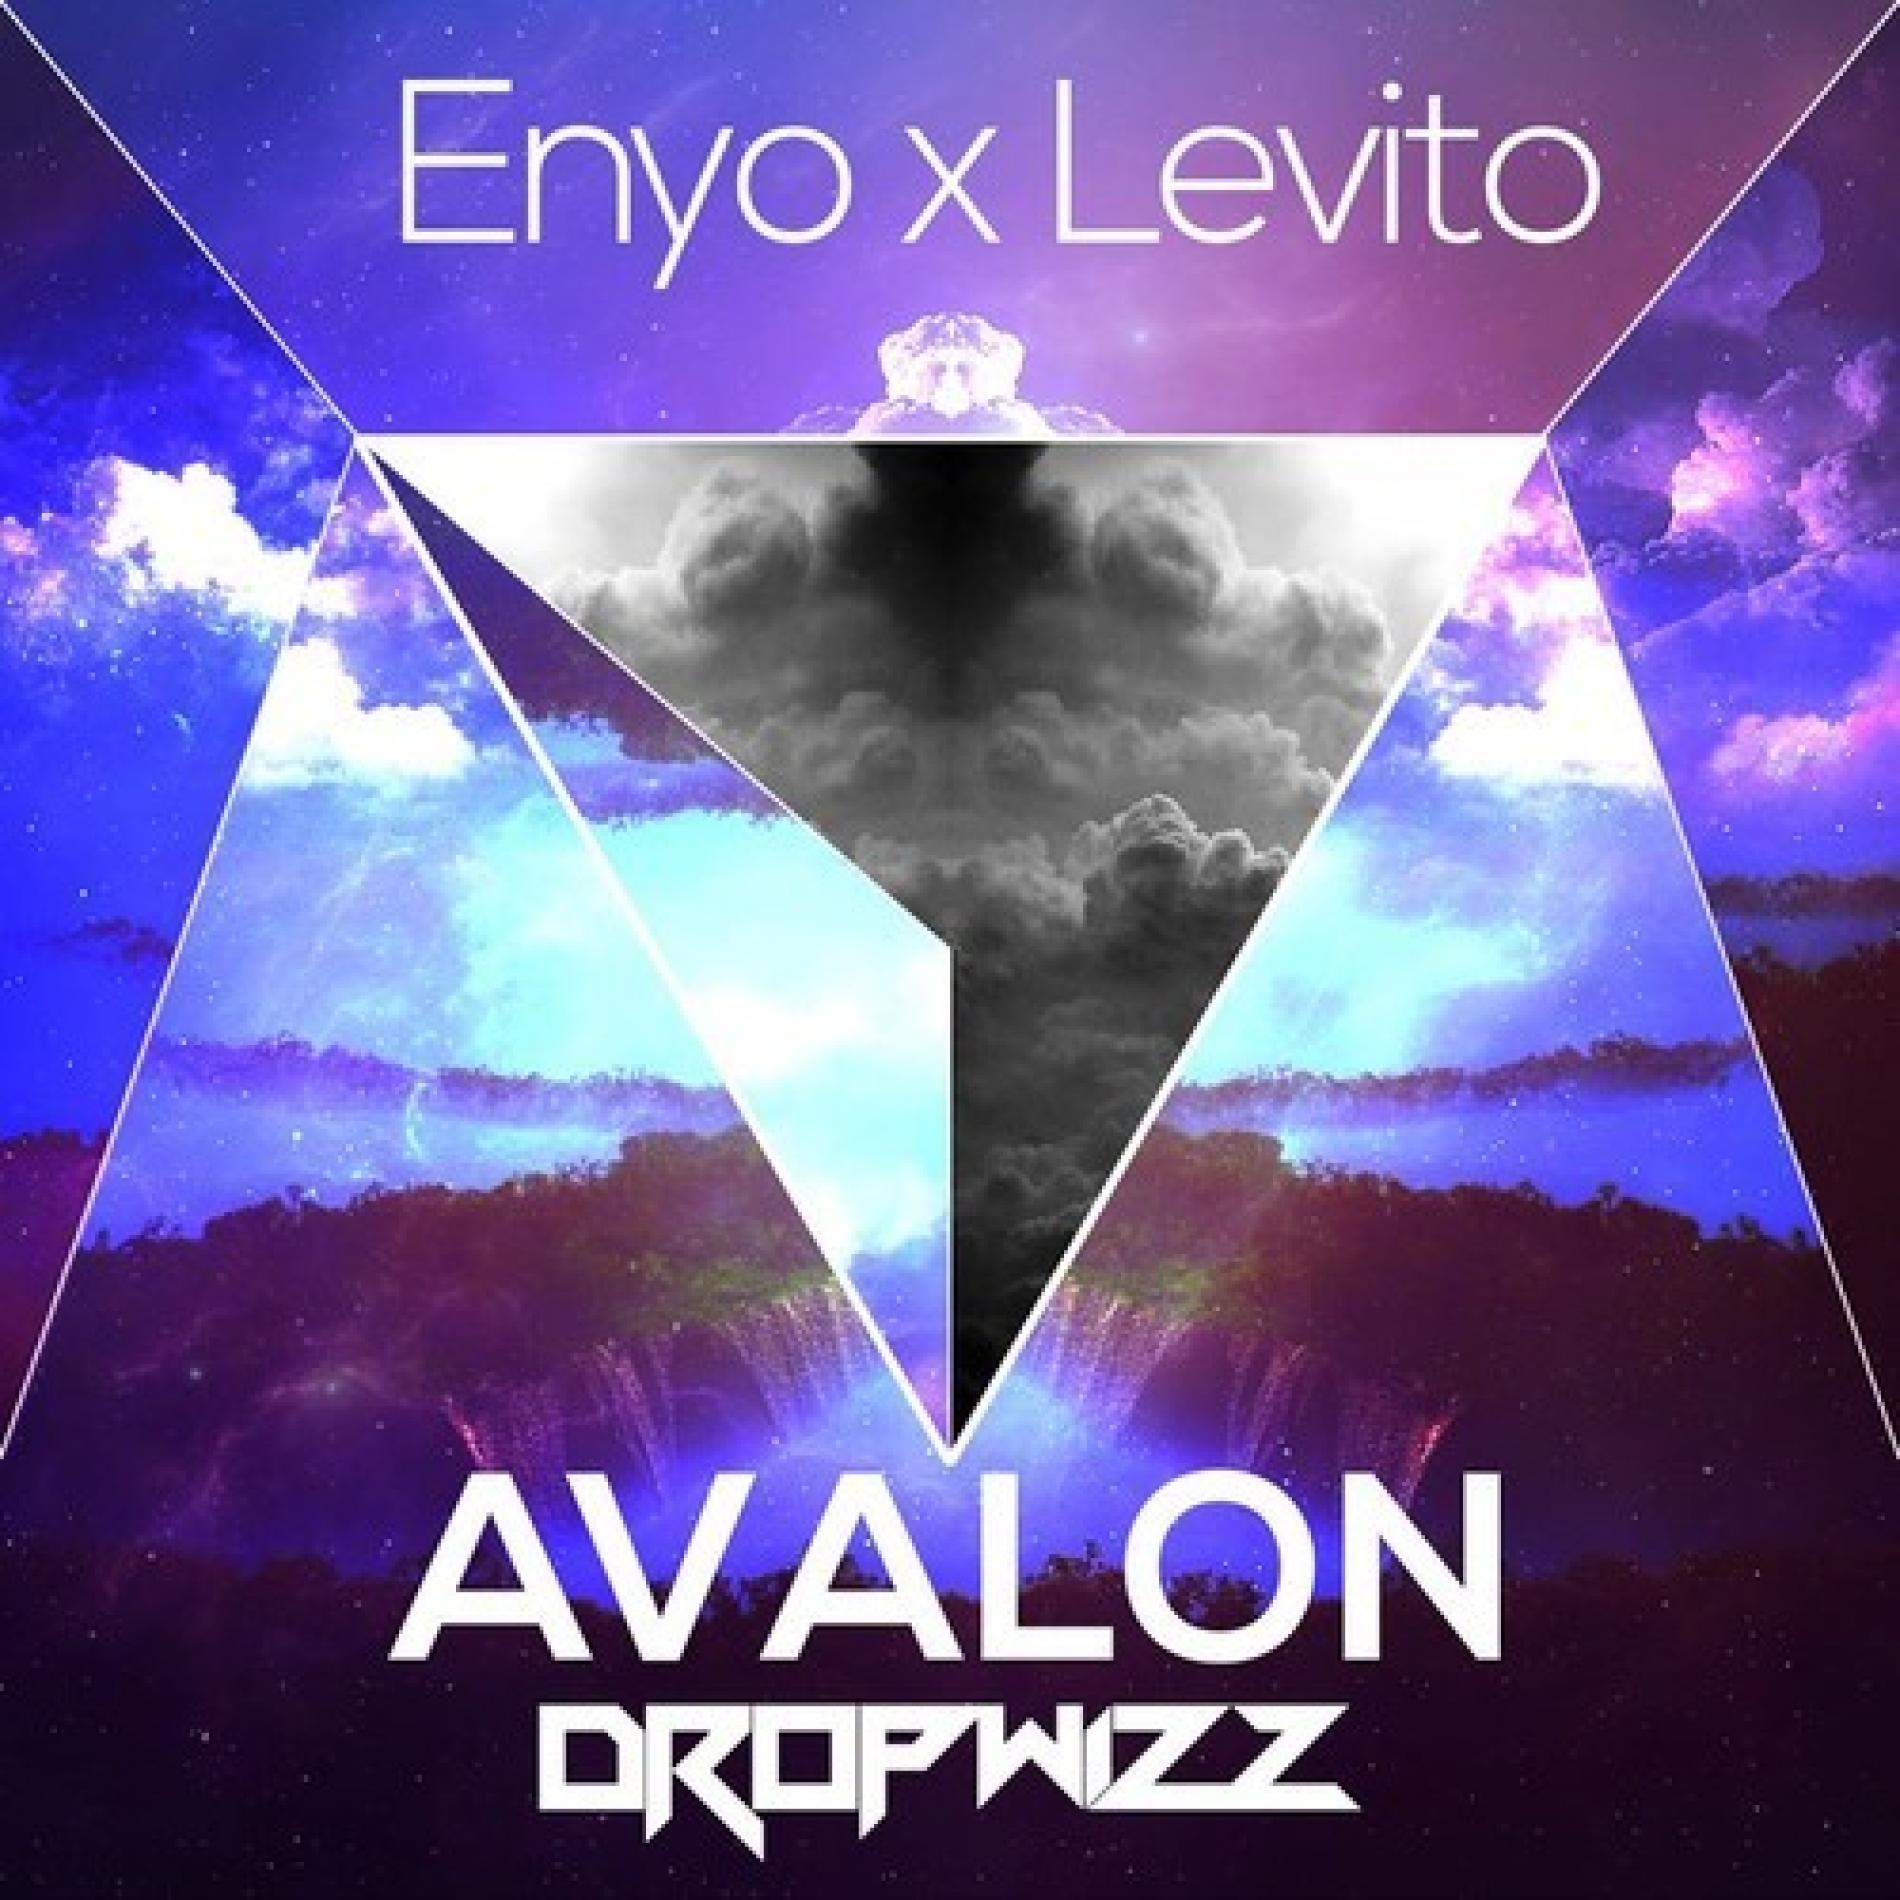 Enyo x Levito – Avalon (Dropwizz Remix)